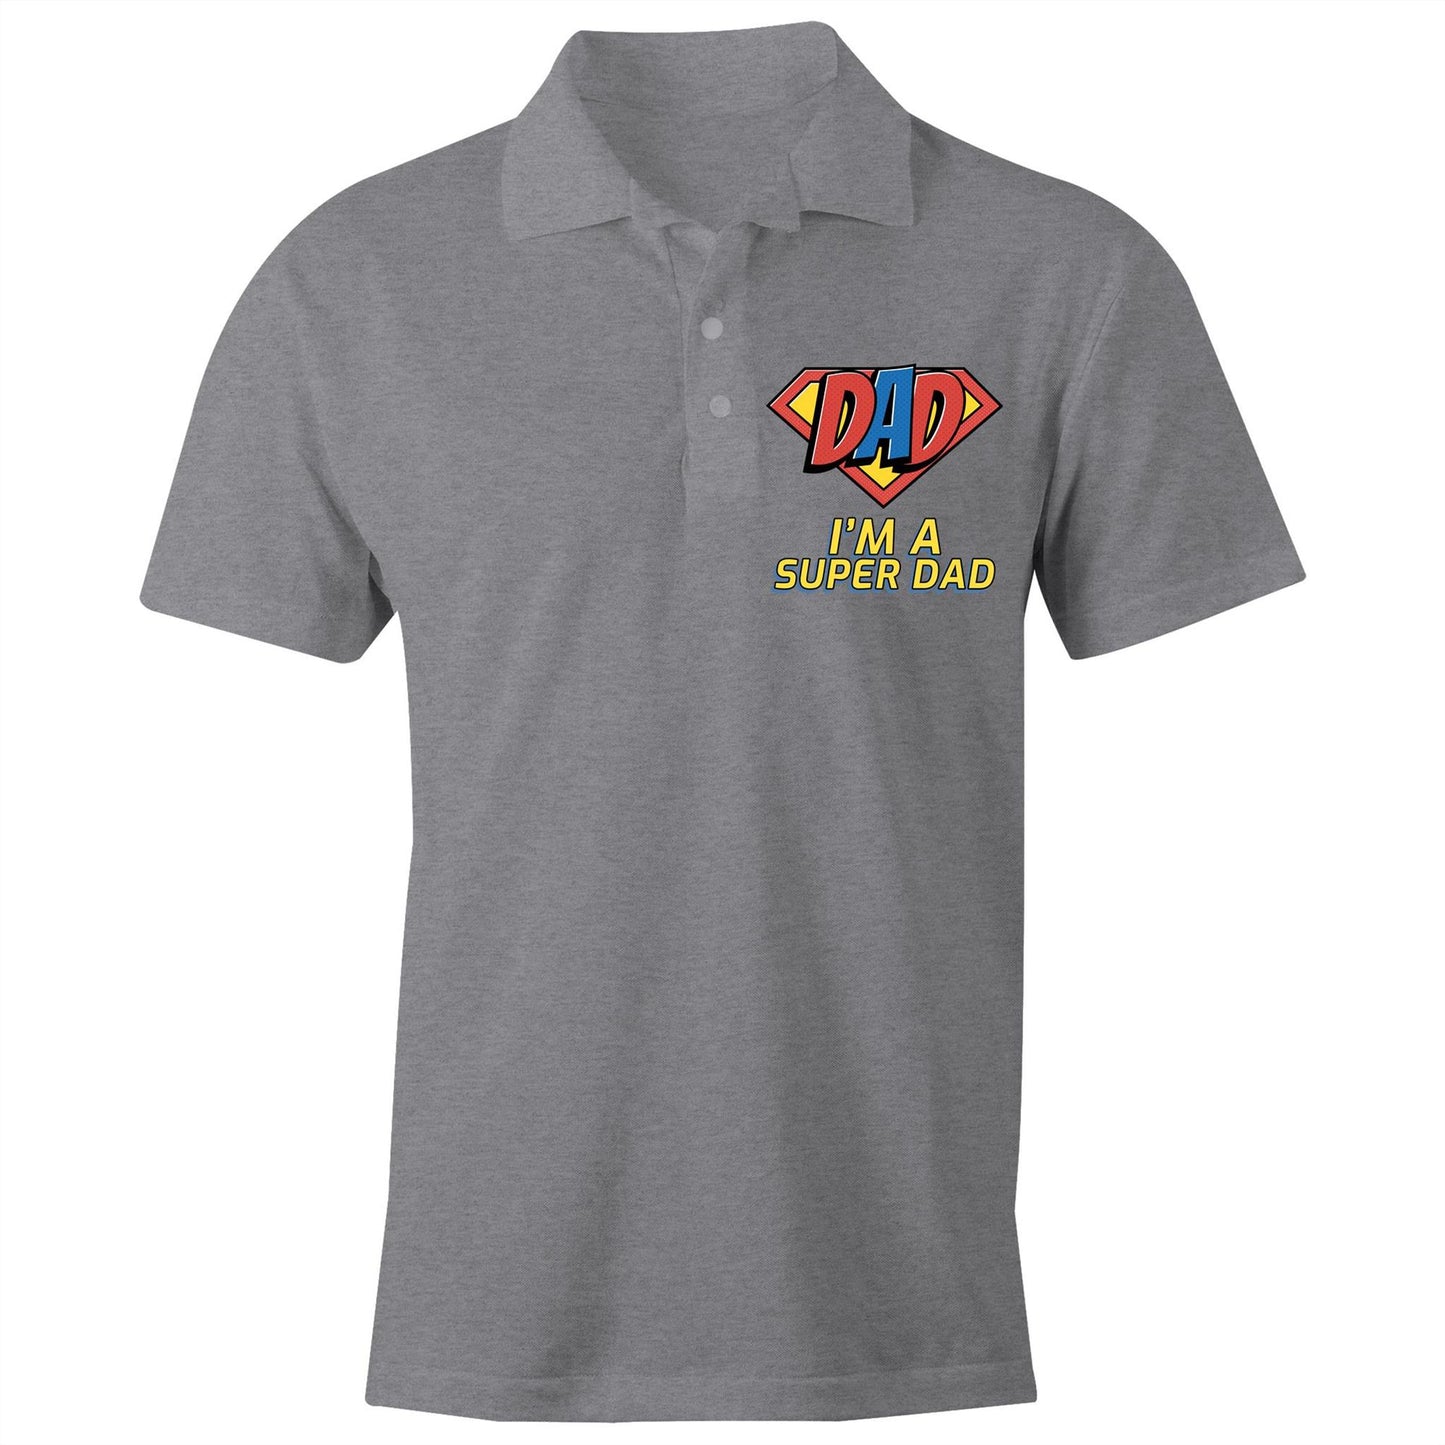 I'm A Super Dad - Chad S/S Polo Shirt, Printed Grey Marle Polo Shirt comic Dad